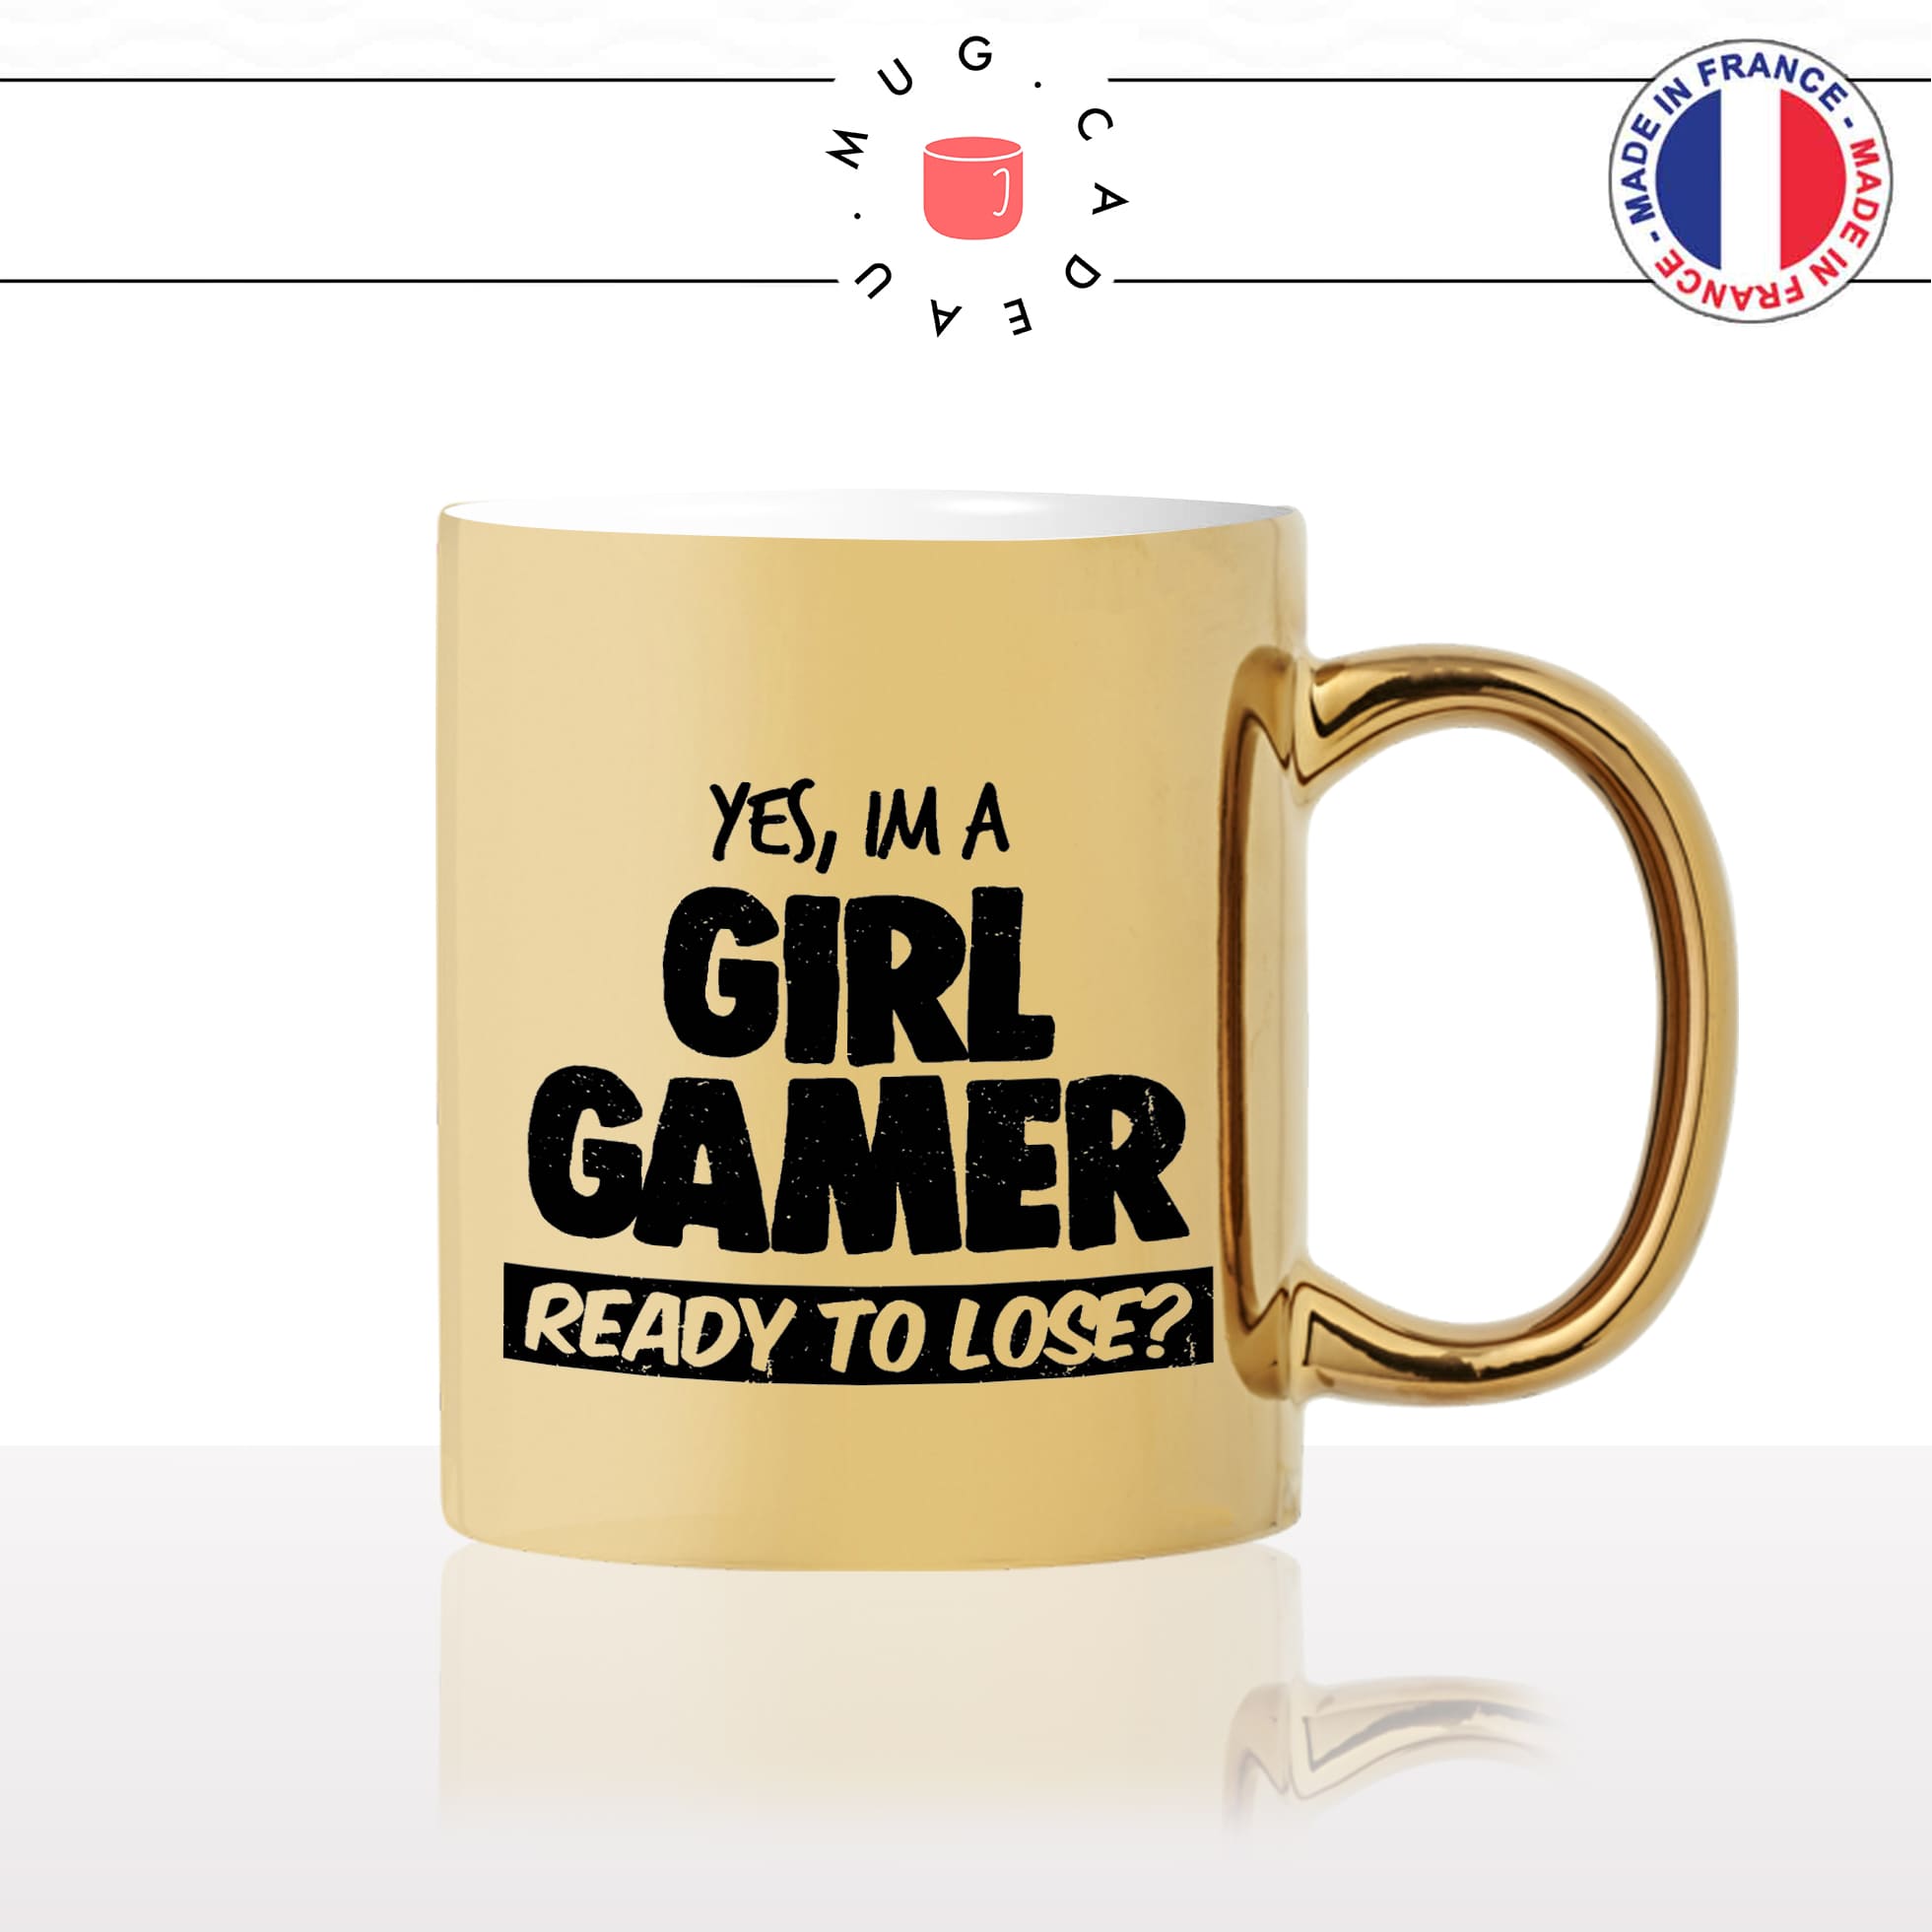 mug-tasse-or-doré-gold-unique-girl-gamer-ready-to-loose-gaming-jeux-video-homme-femme-humour-fun-cool-idée-cadeau-original-personnalisé2